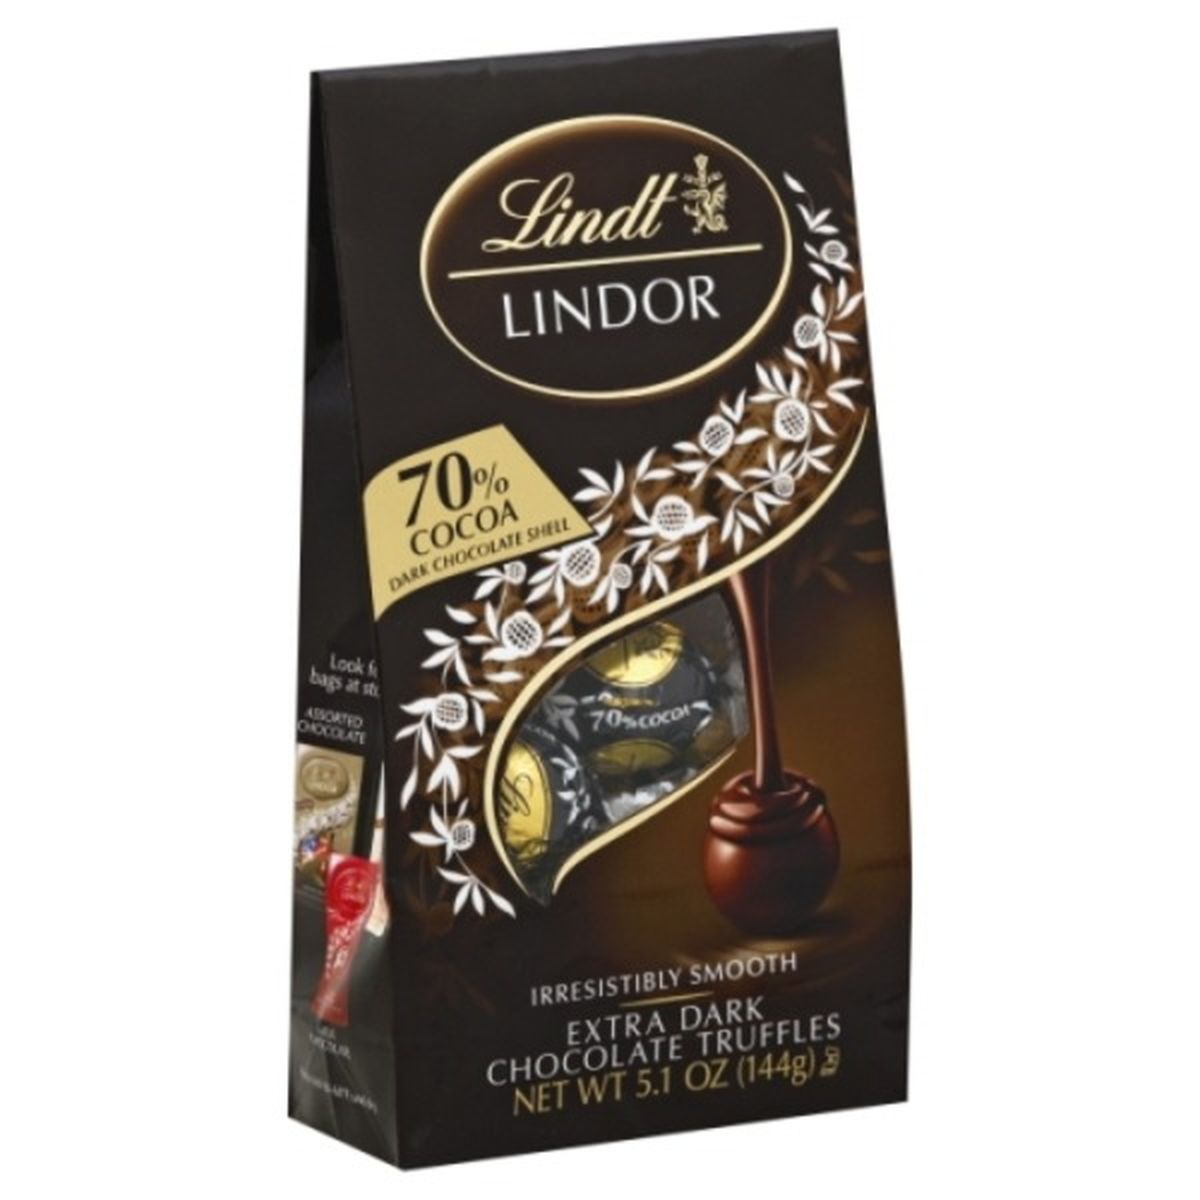 Calories in Lindt Lindor Truffles, Extra Dark Chocolate, 70% Cocoa